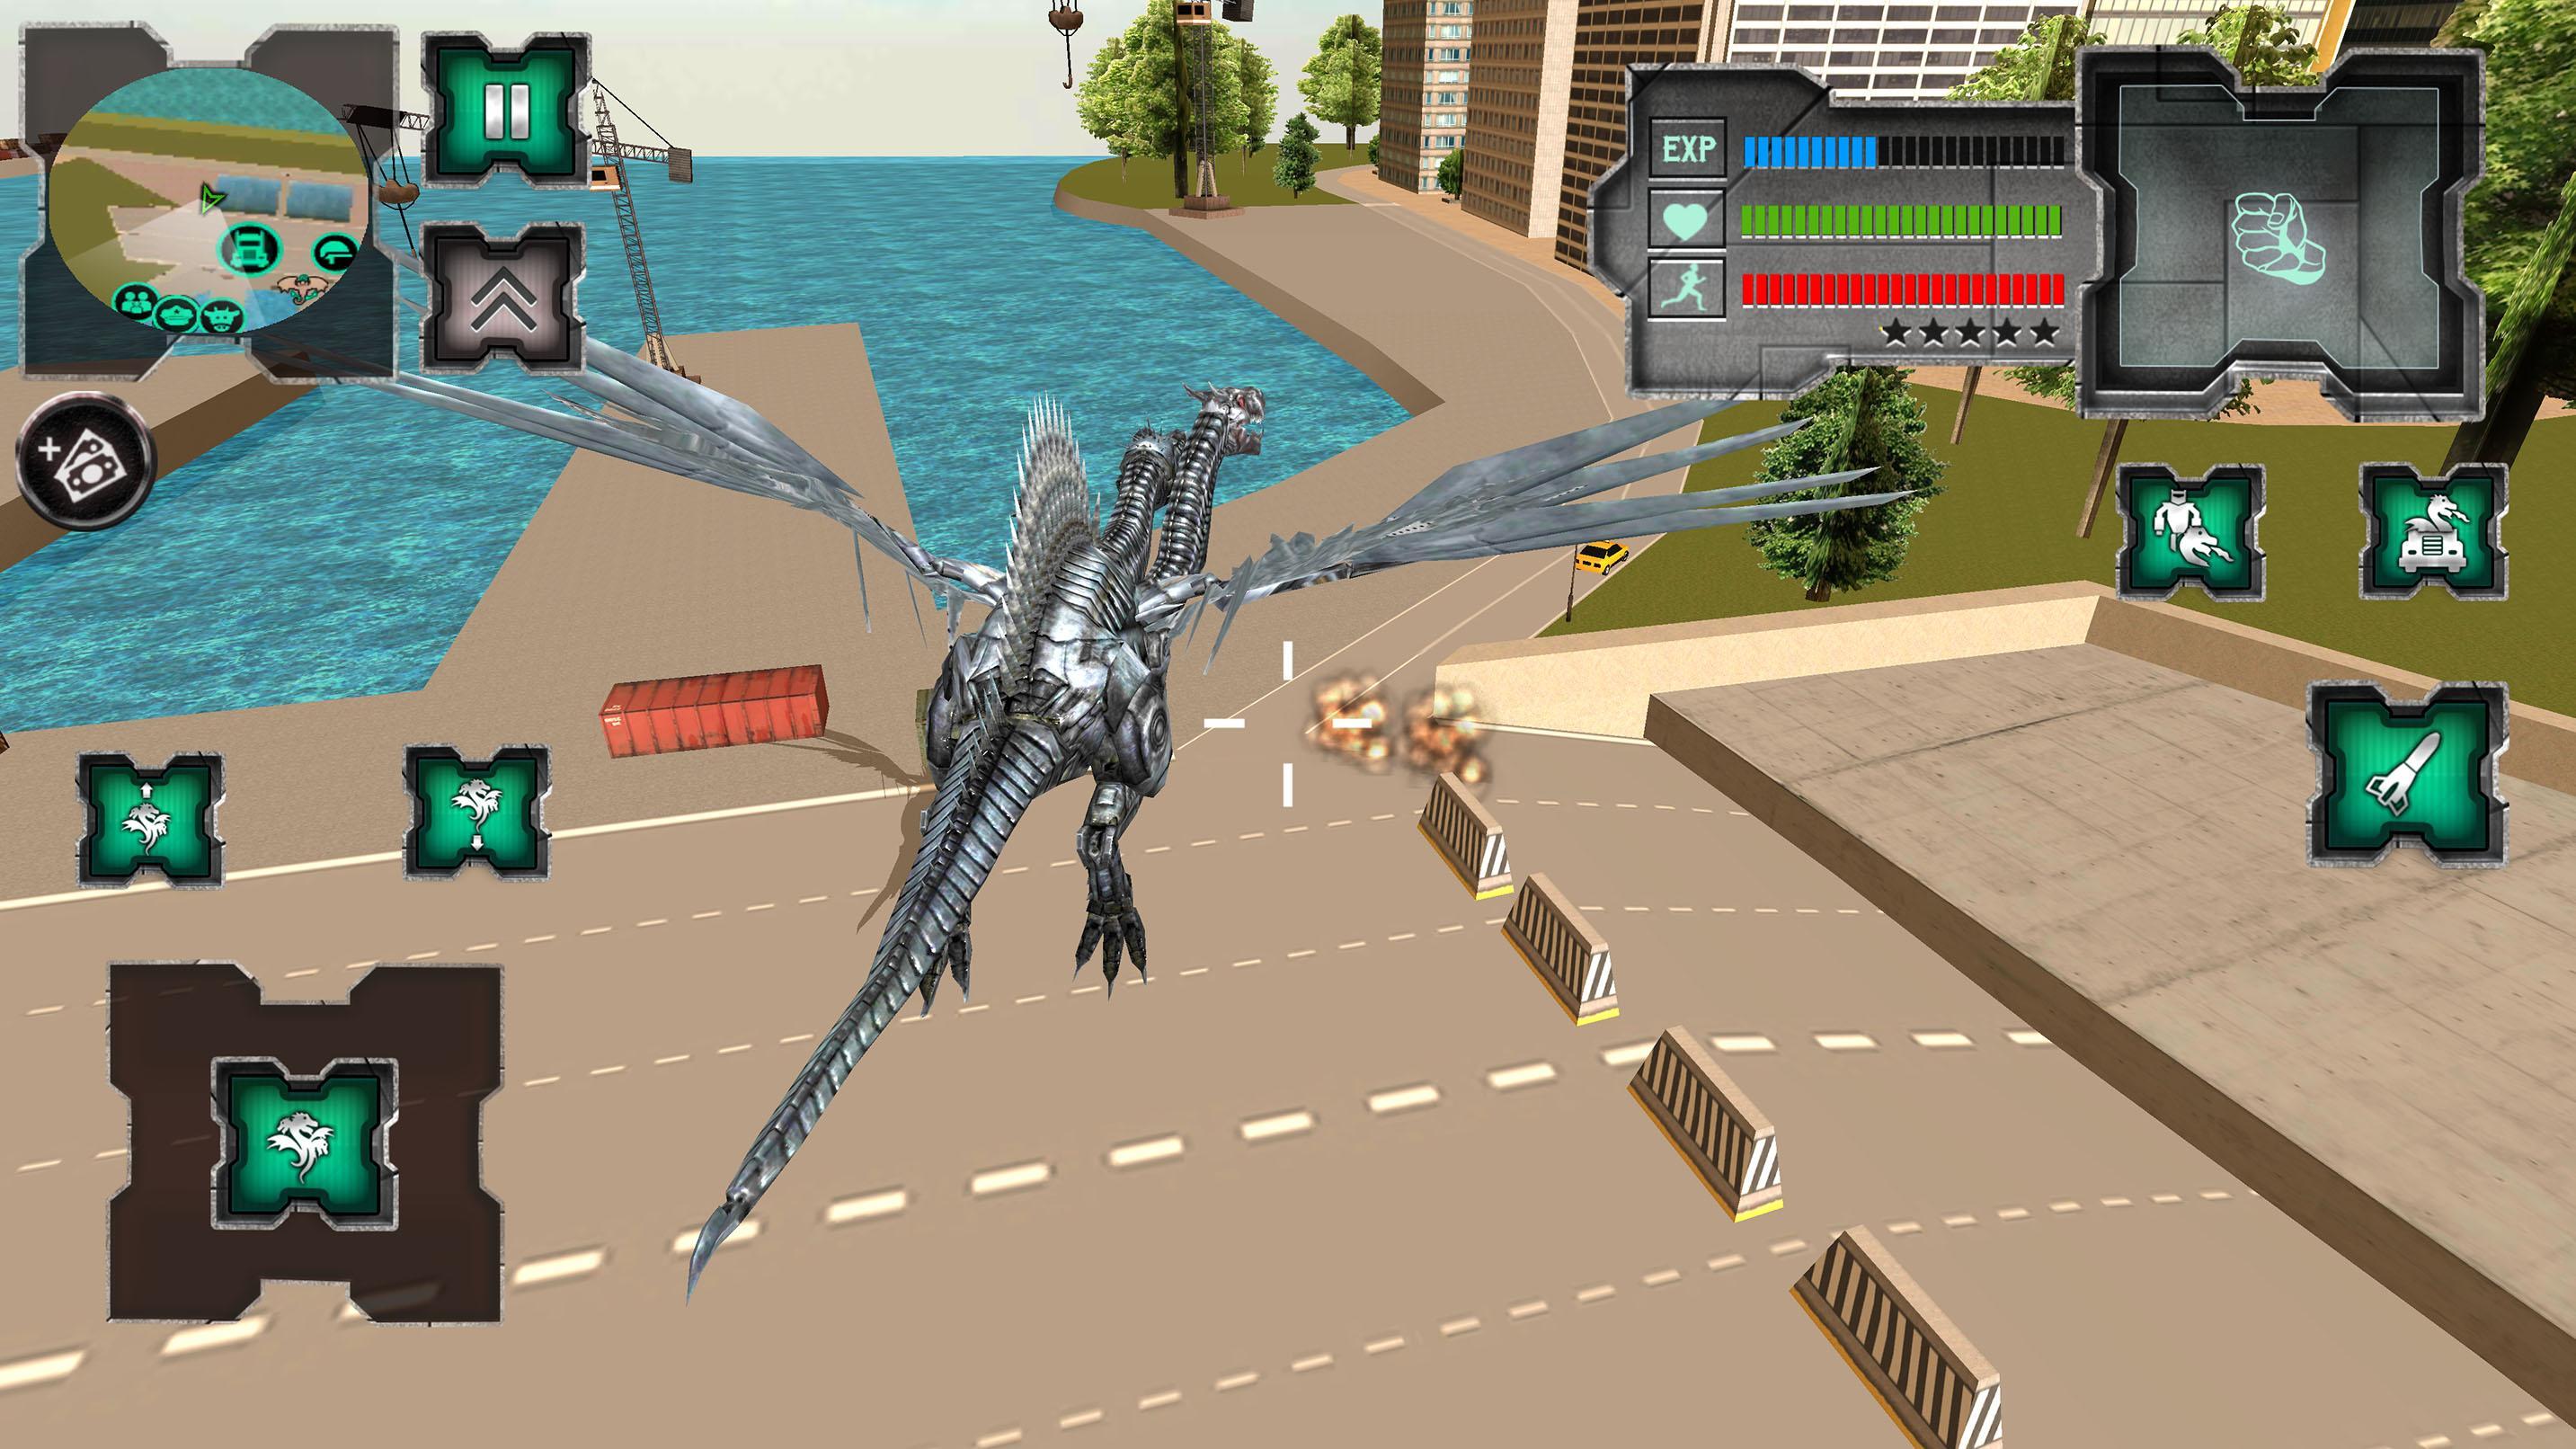 Flying Dragon Robot Simulator :Transformation War